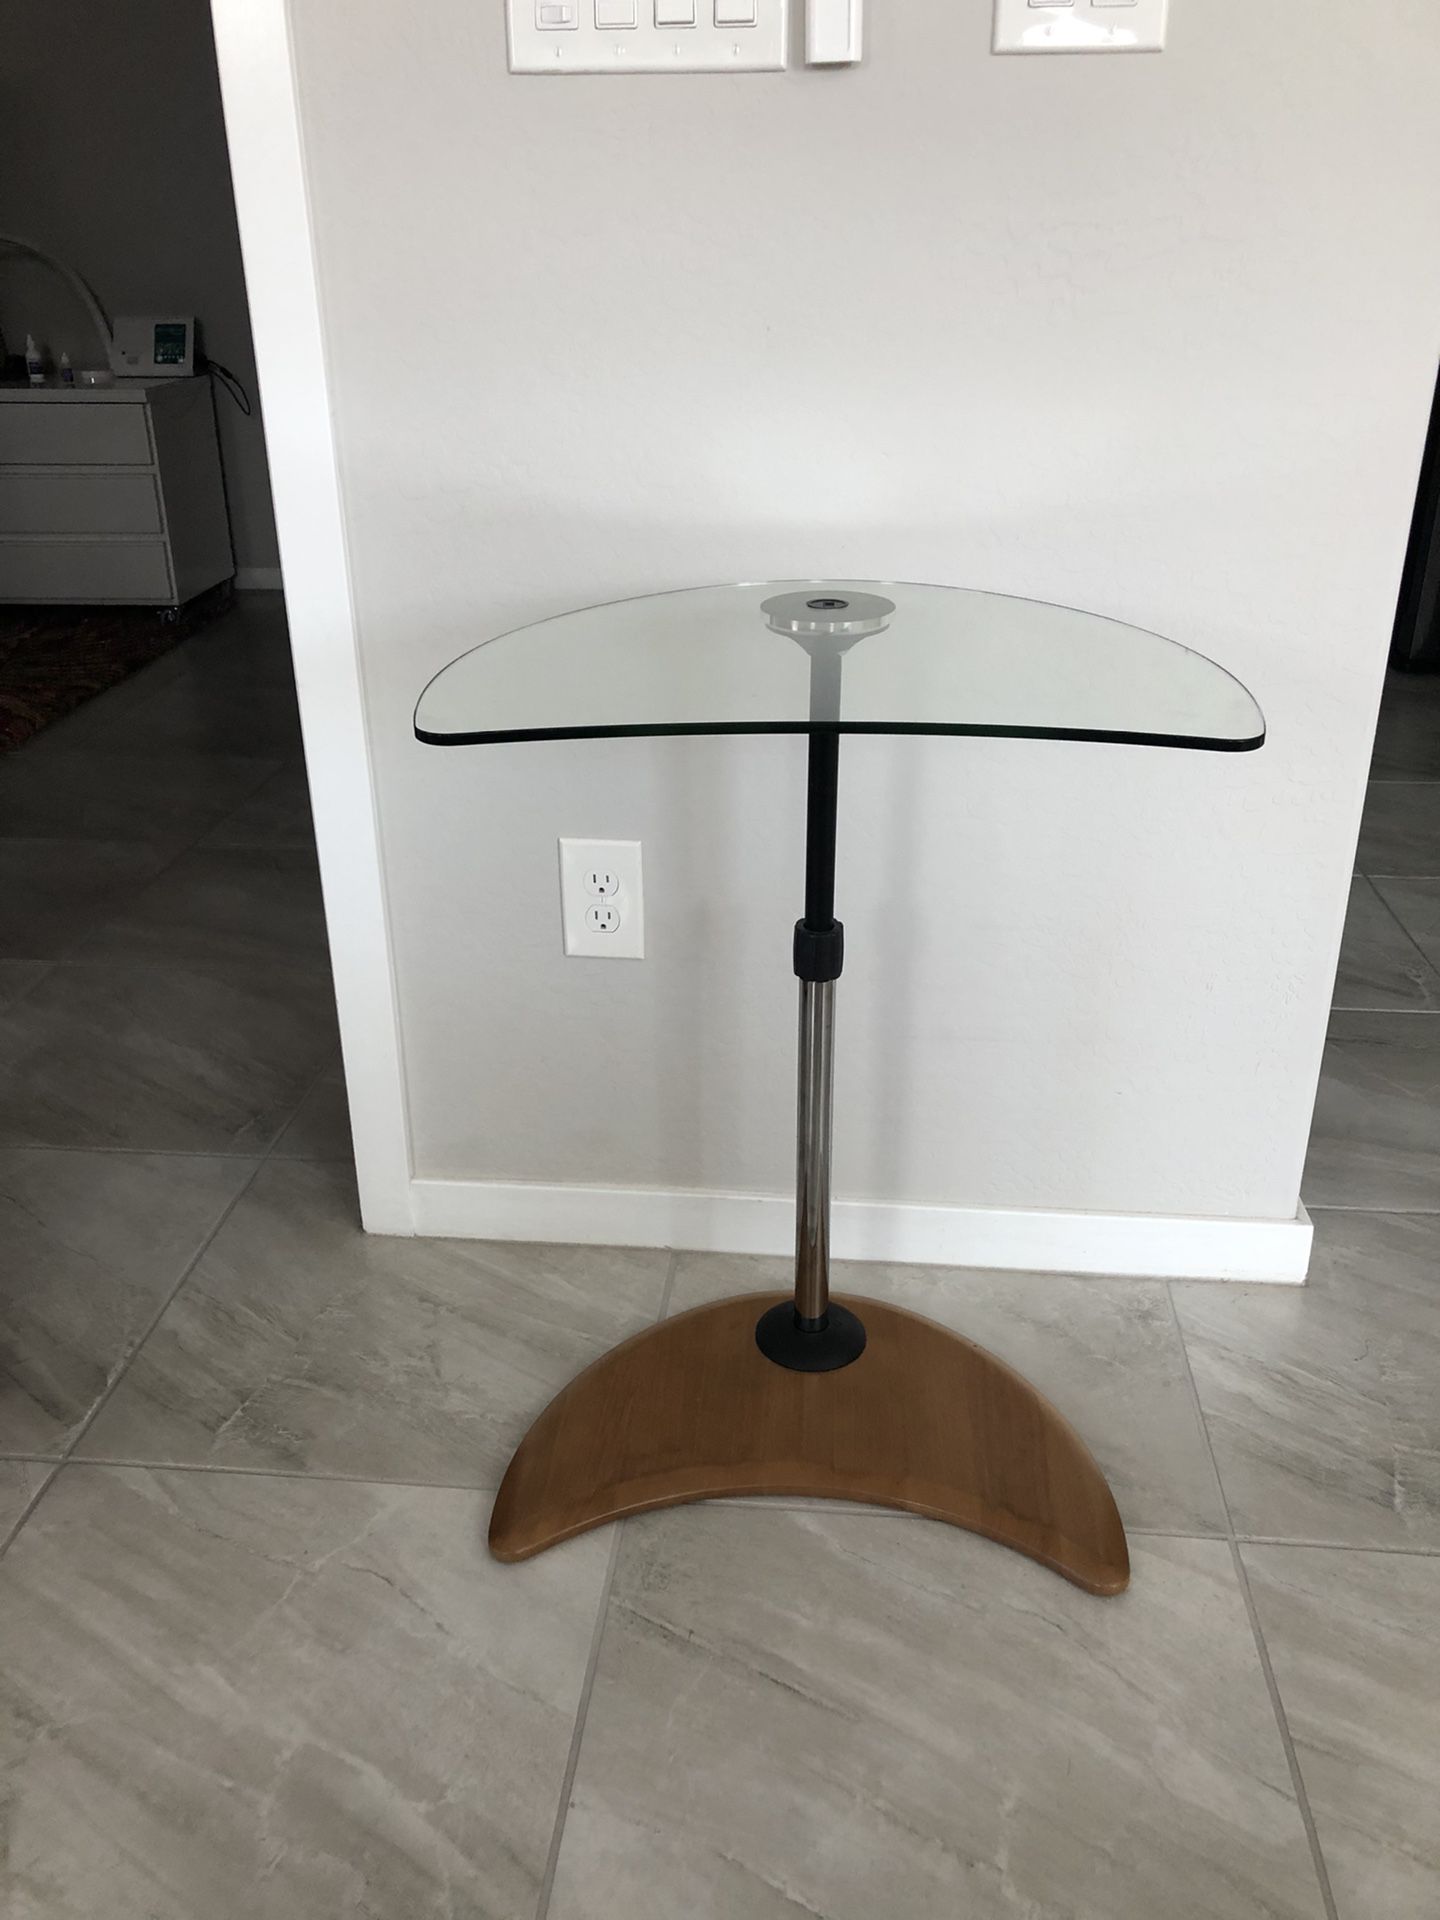 End table - modern design